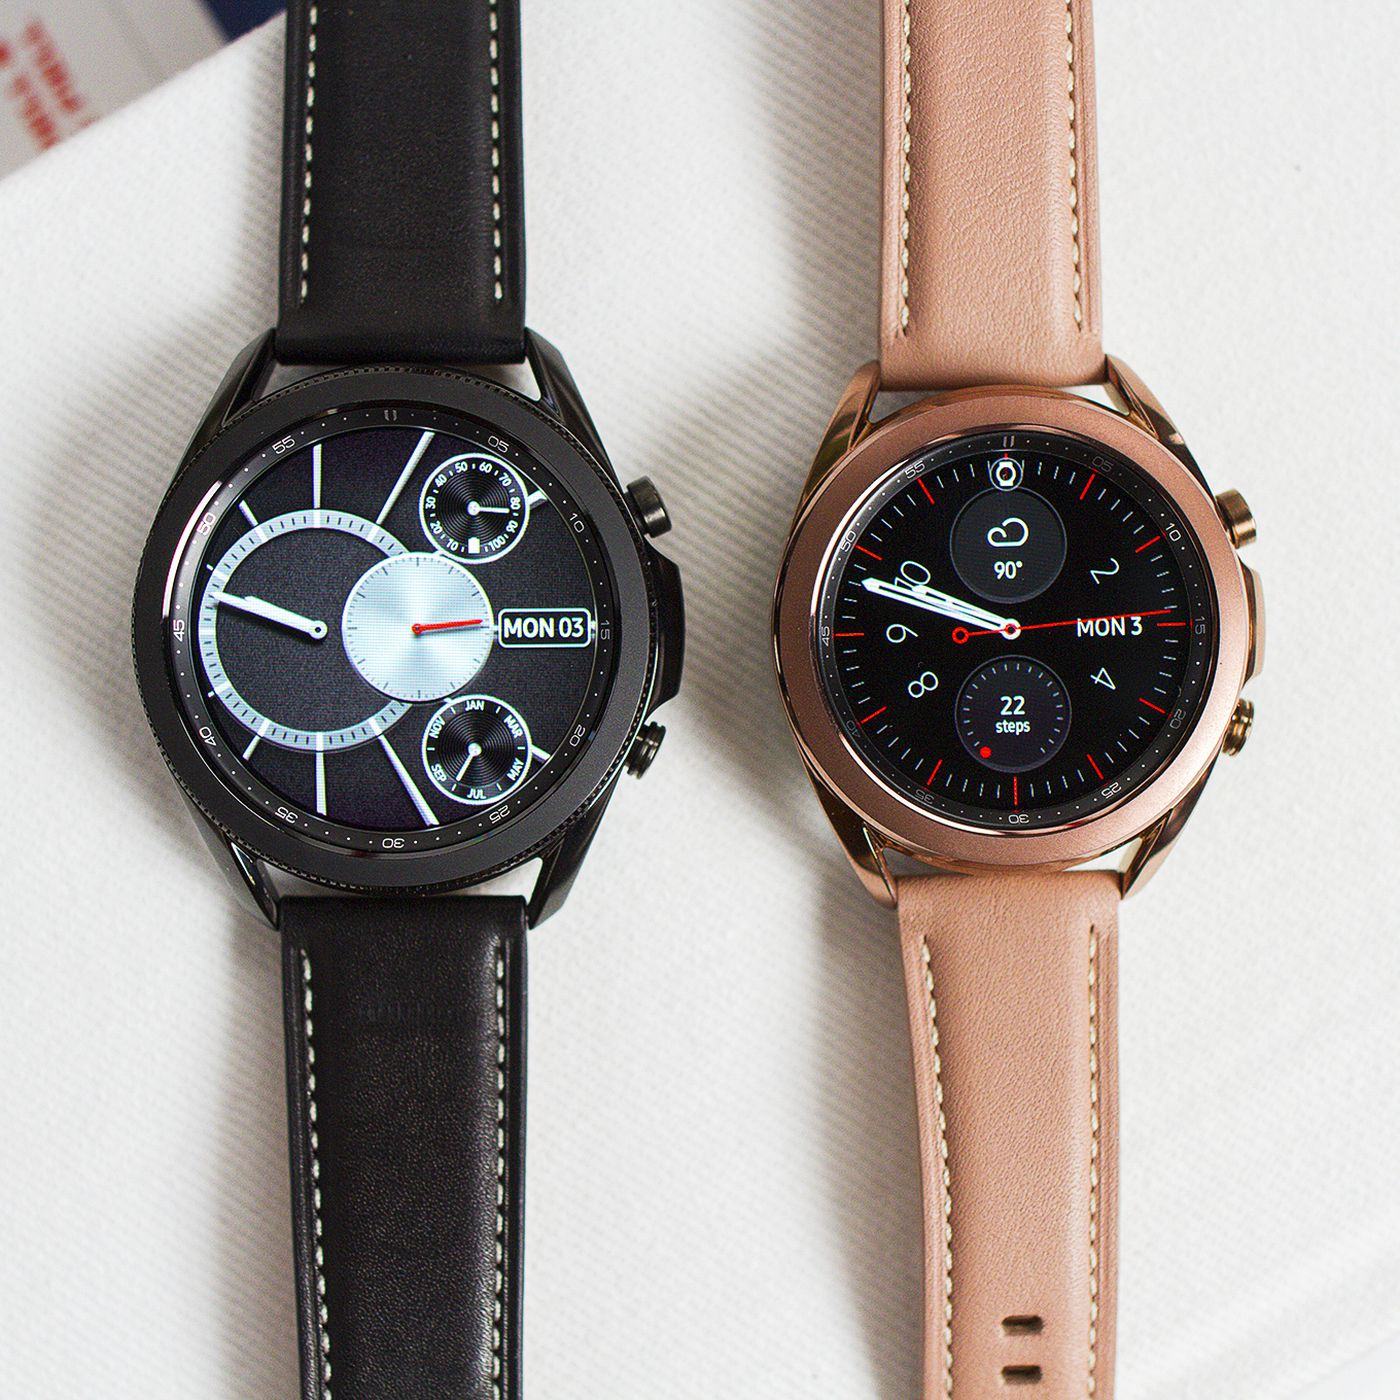 Đánh giá Samsung Galaxy Watch 3 - NewTechShop